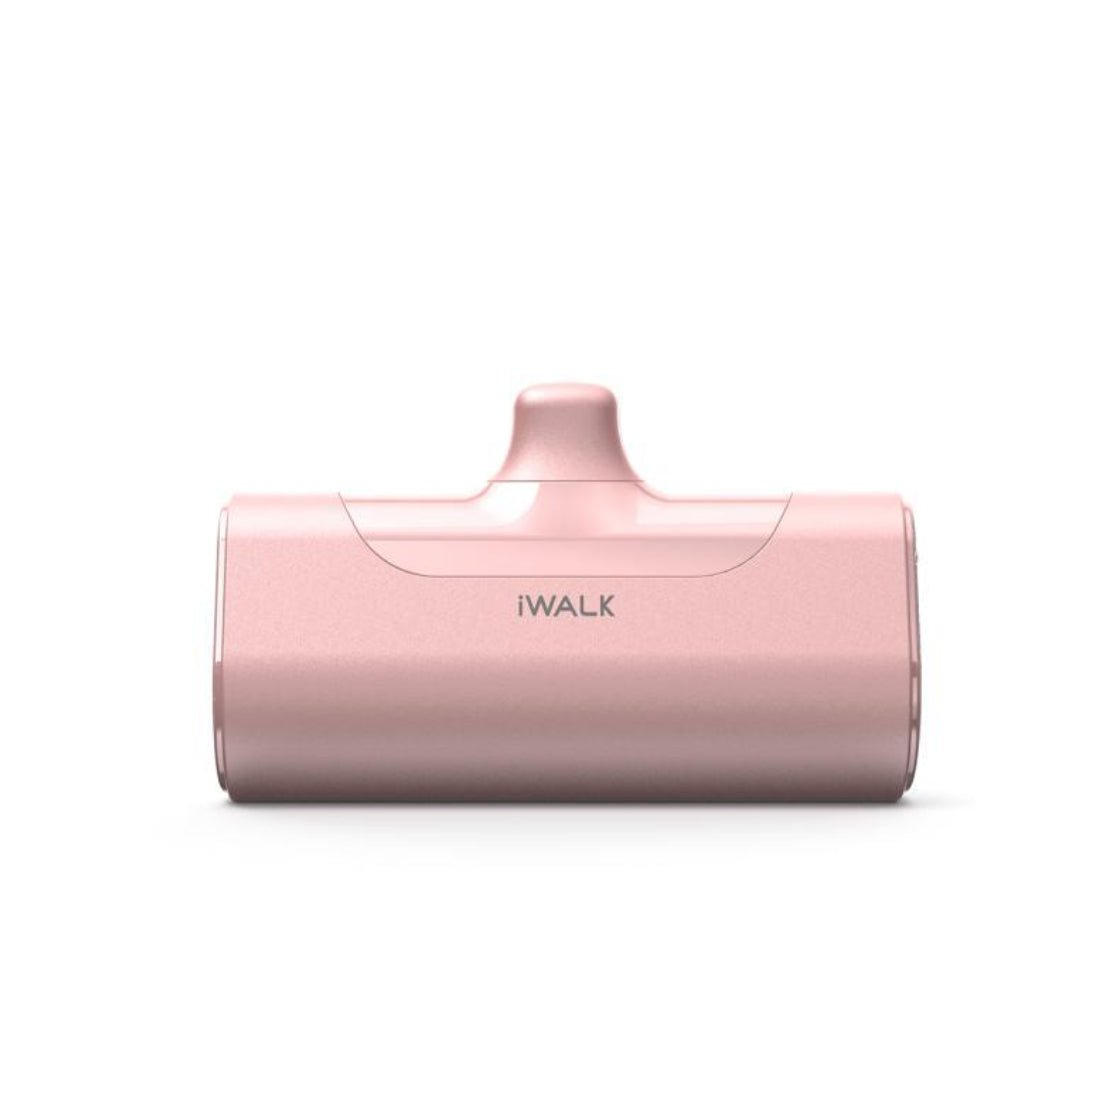 iWalk 4500mAh Portable Charger USB Lightening Battery Pack - Pink - مزود طاقة - Store 974 | ستور ٩٧٤